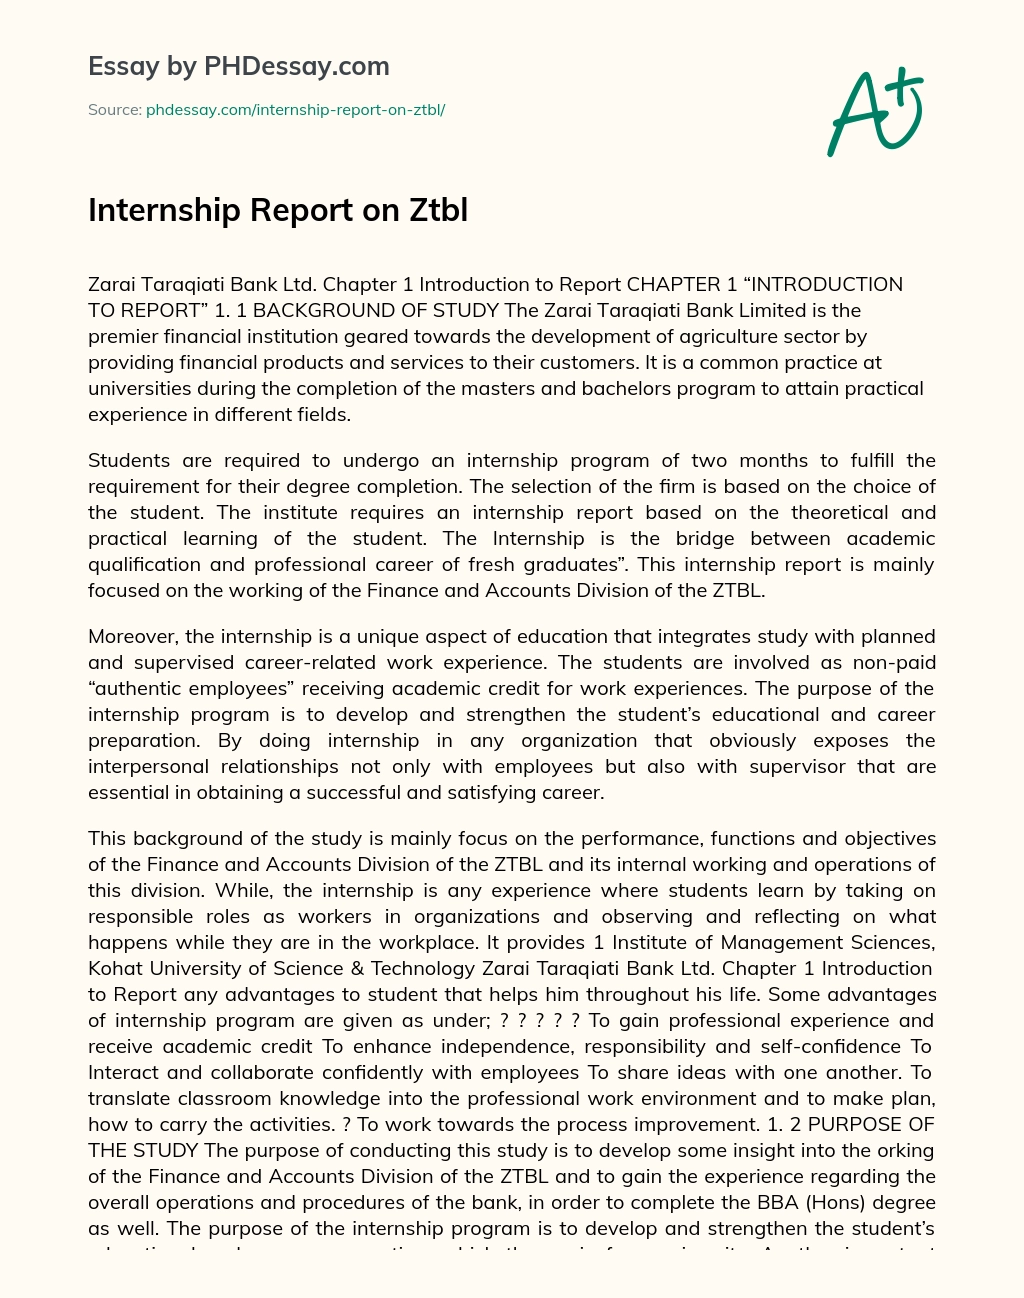 Internship Report on Ztbl essay